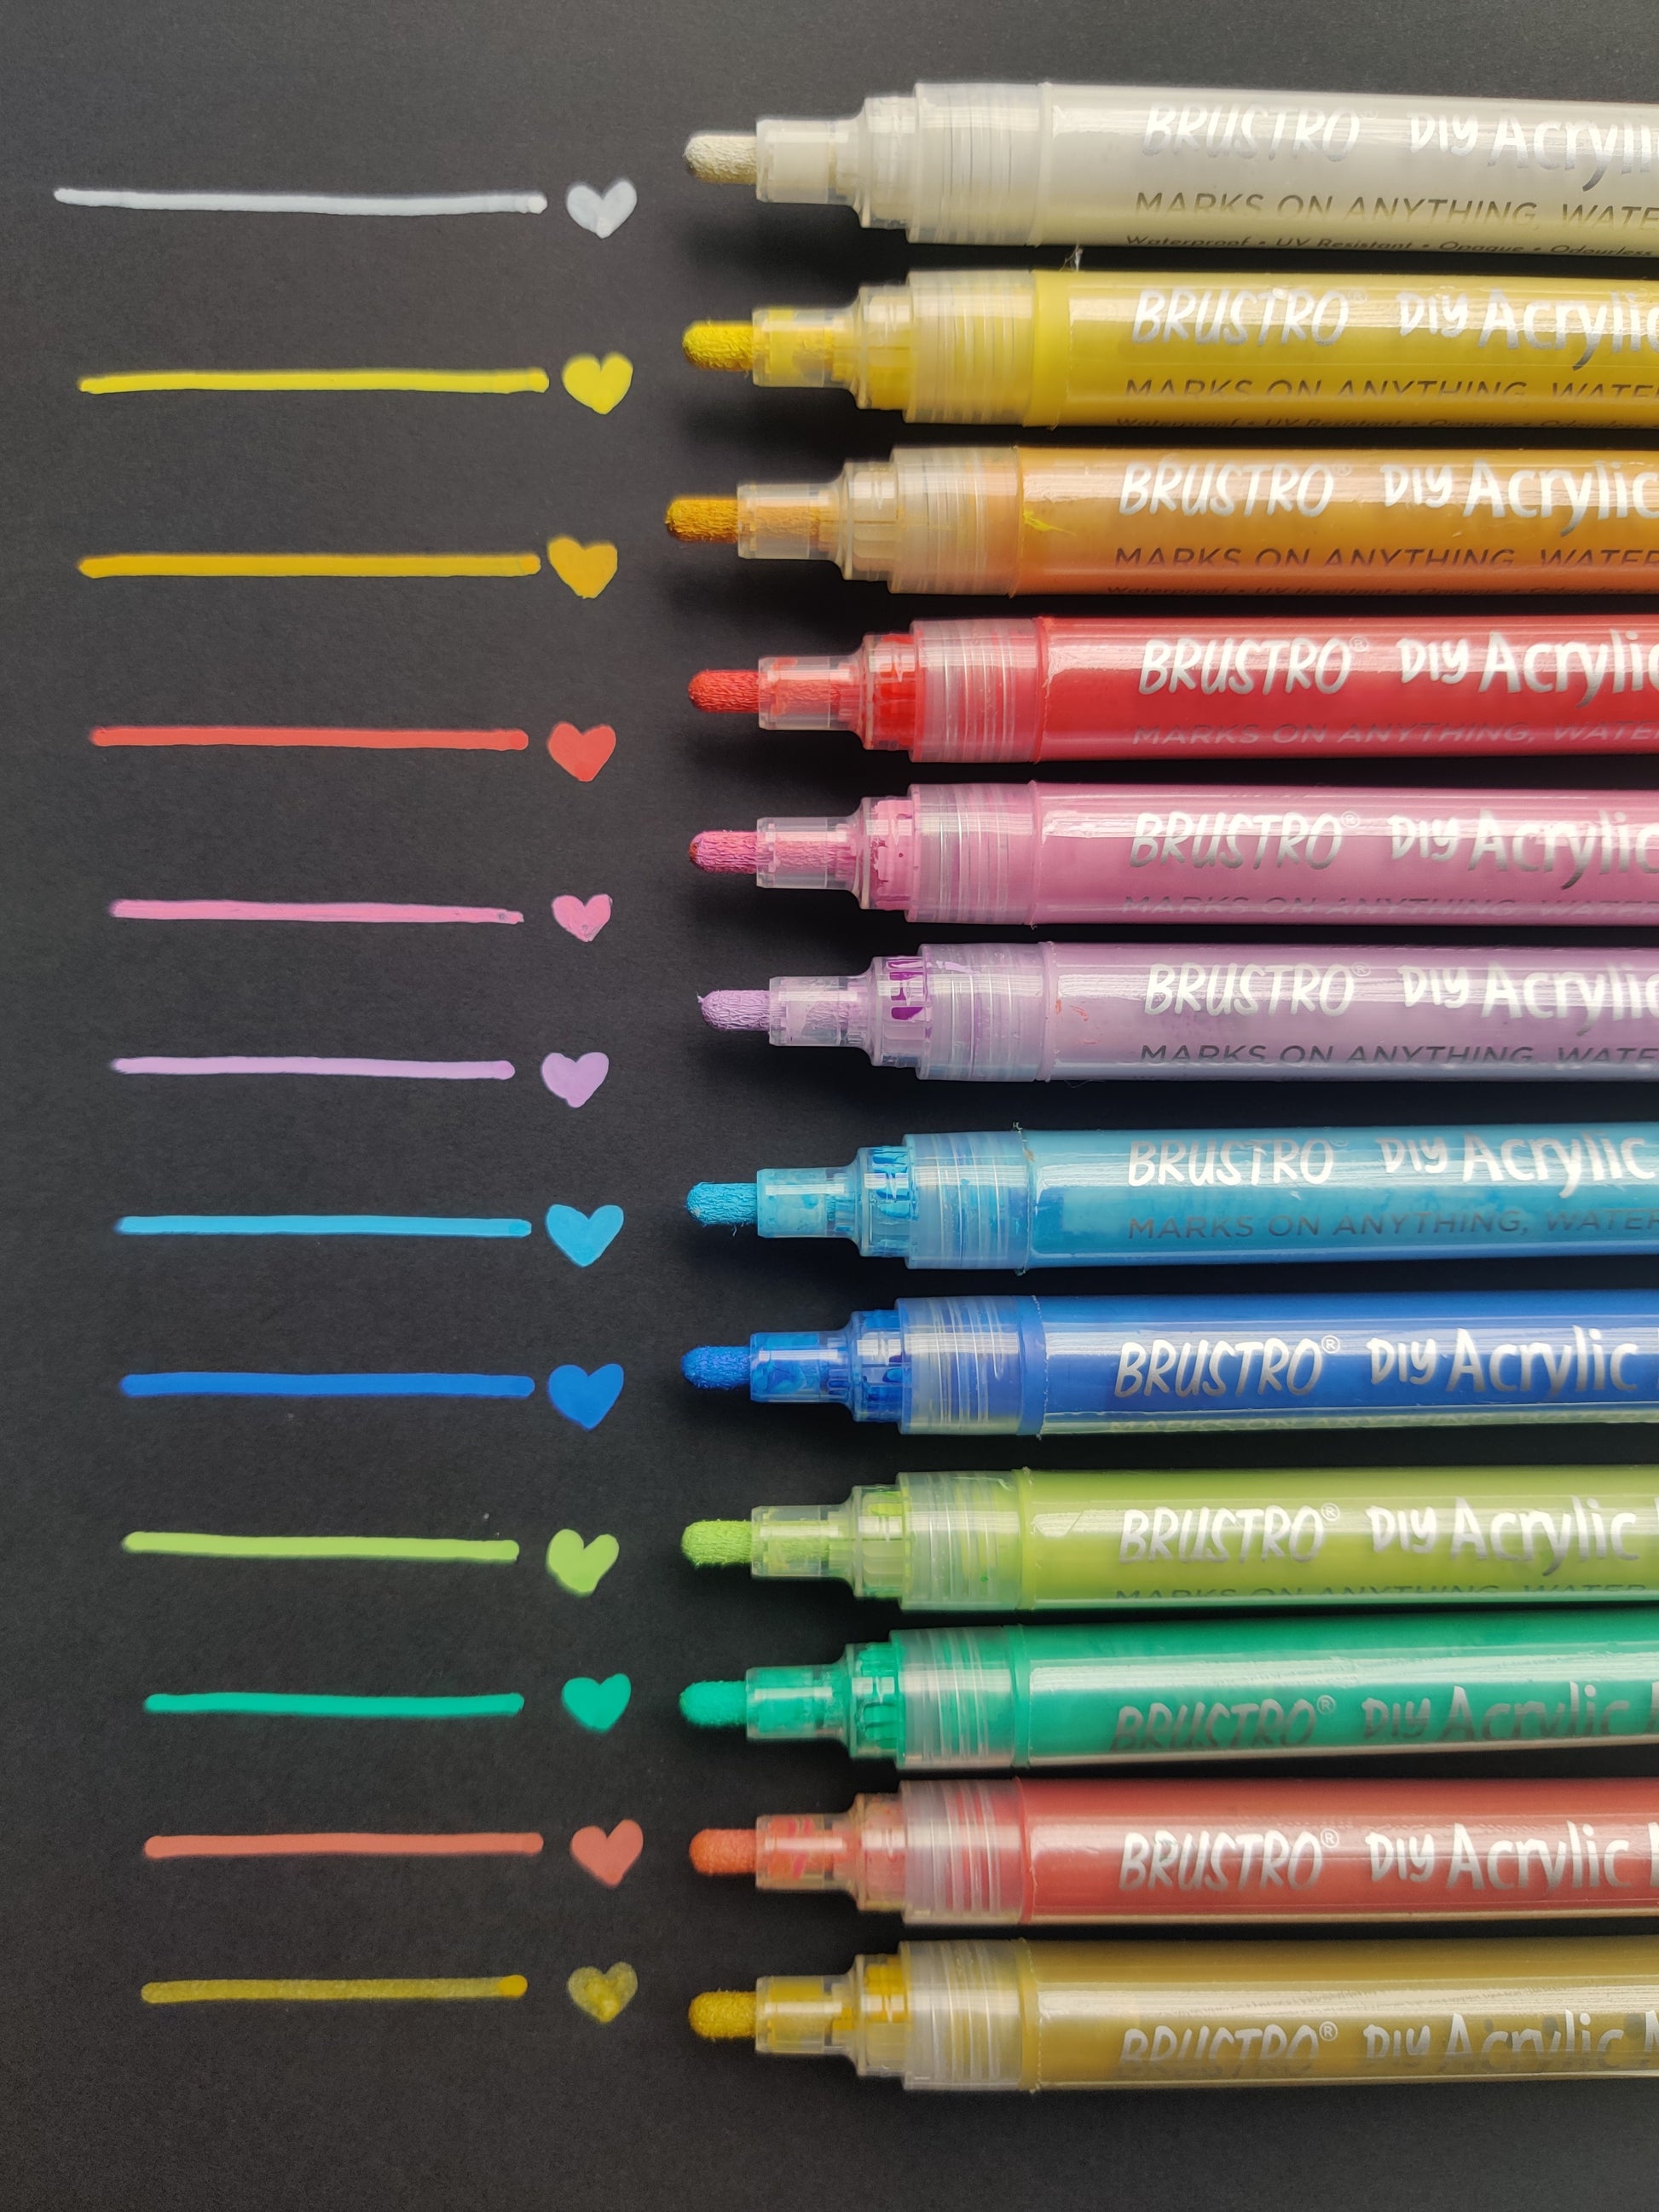 Brustro DIY Acrylic Marker Set - 12 Vibrant Colors/Buy now